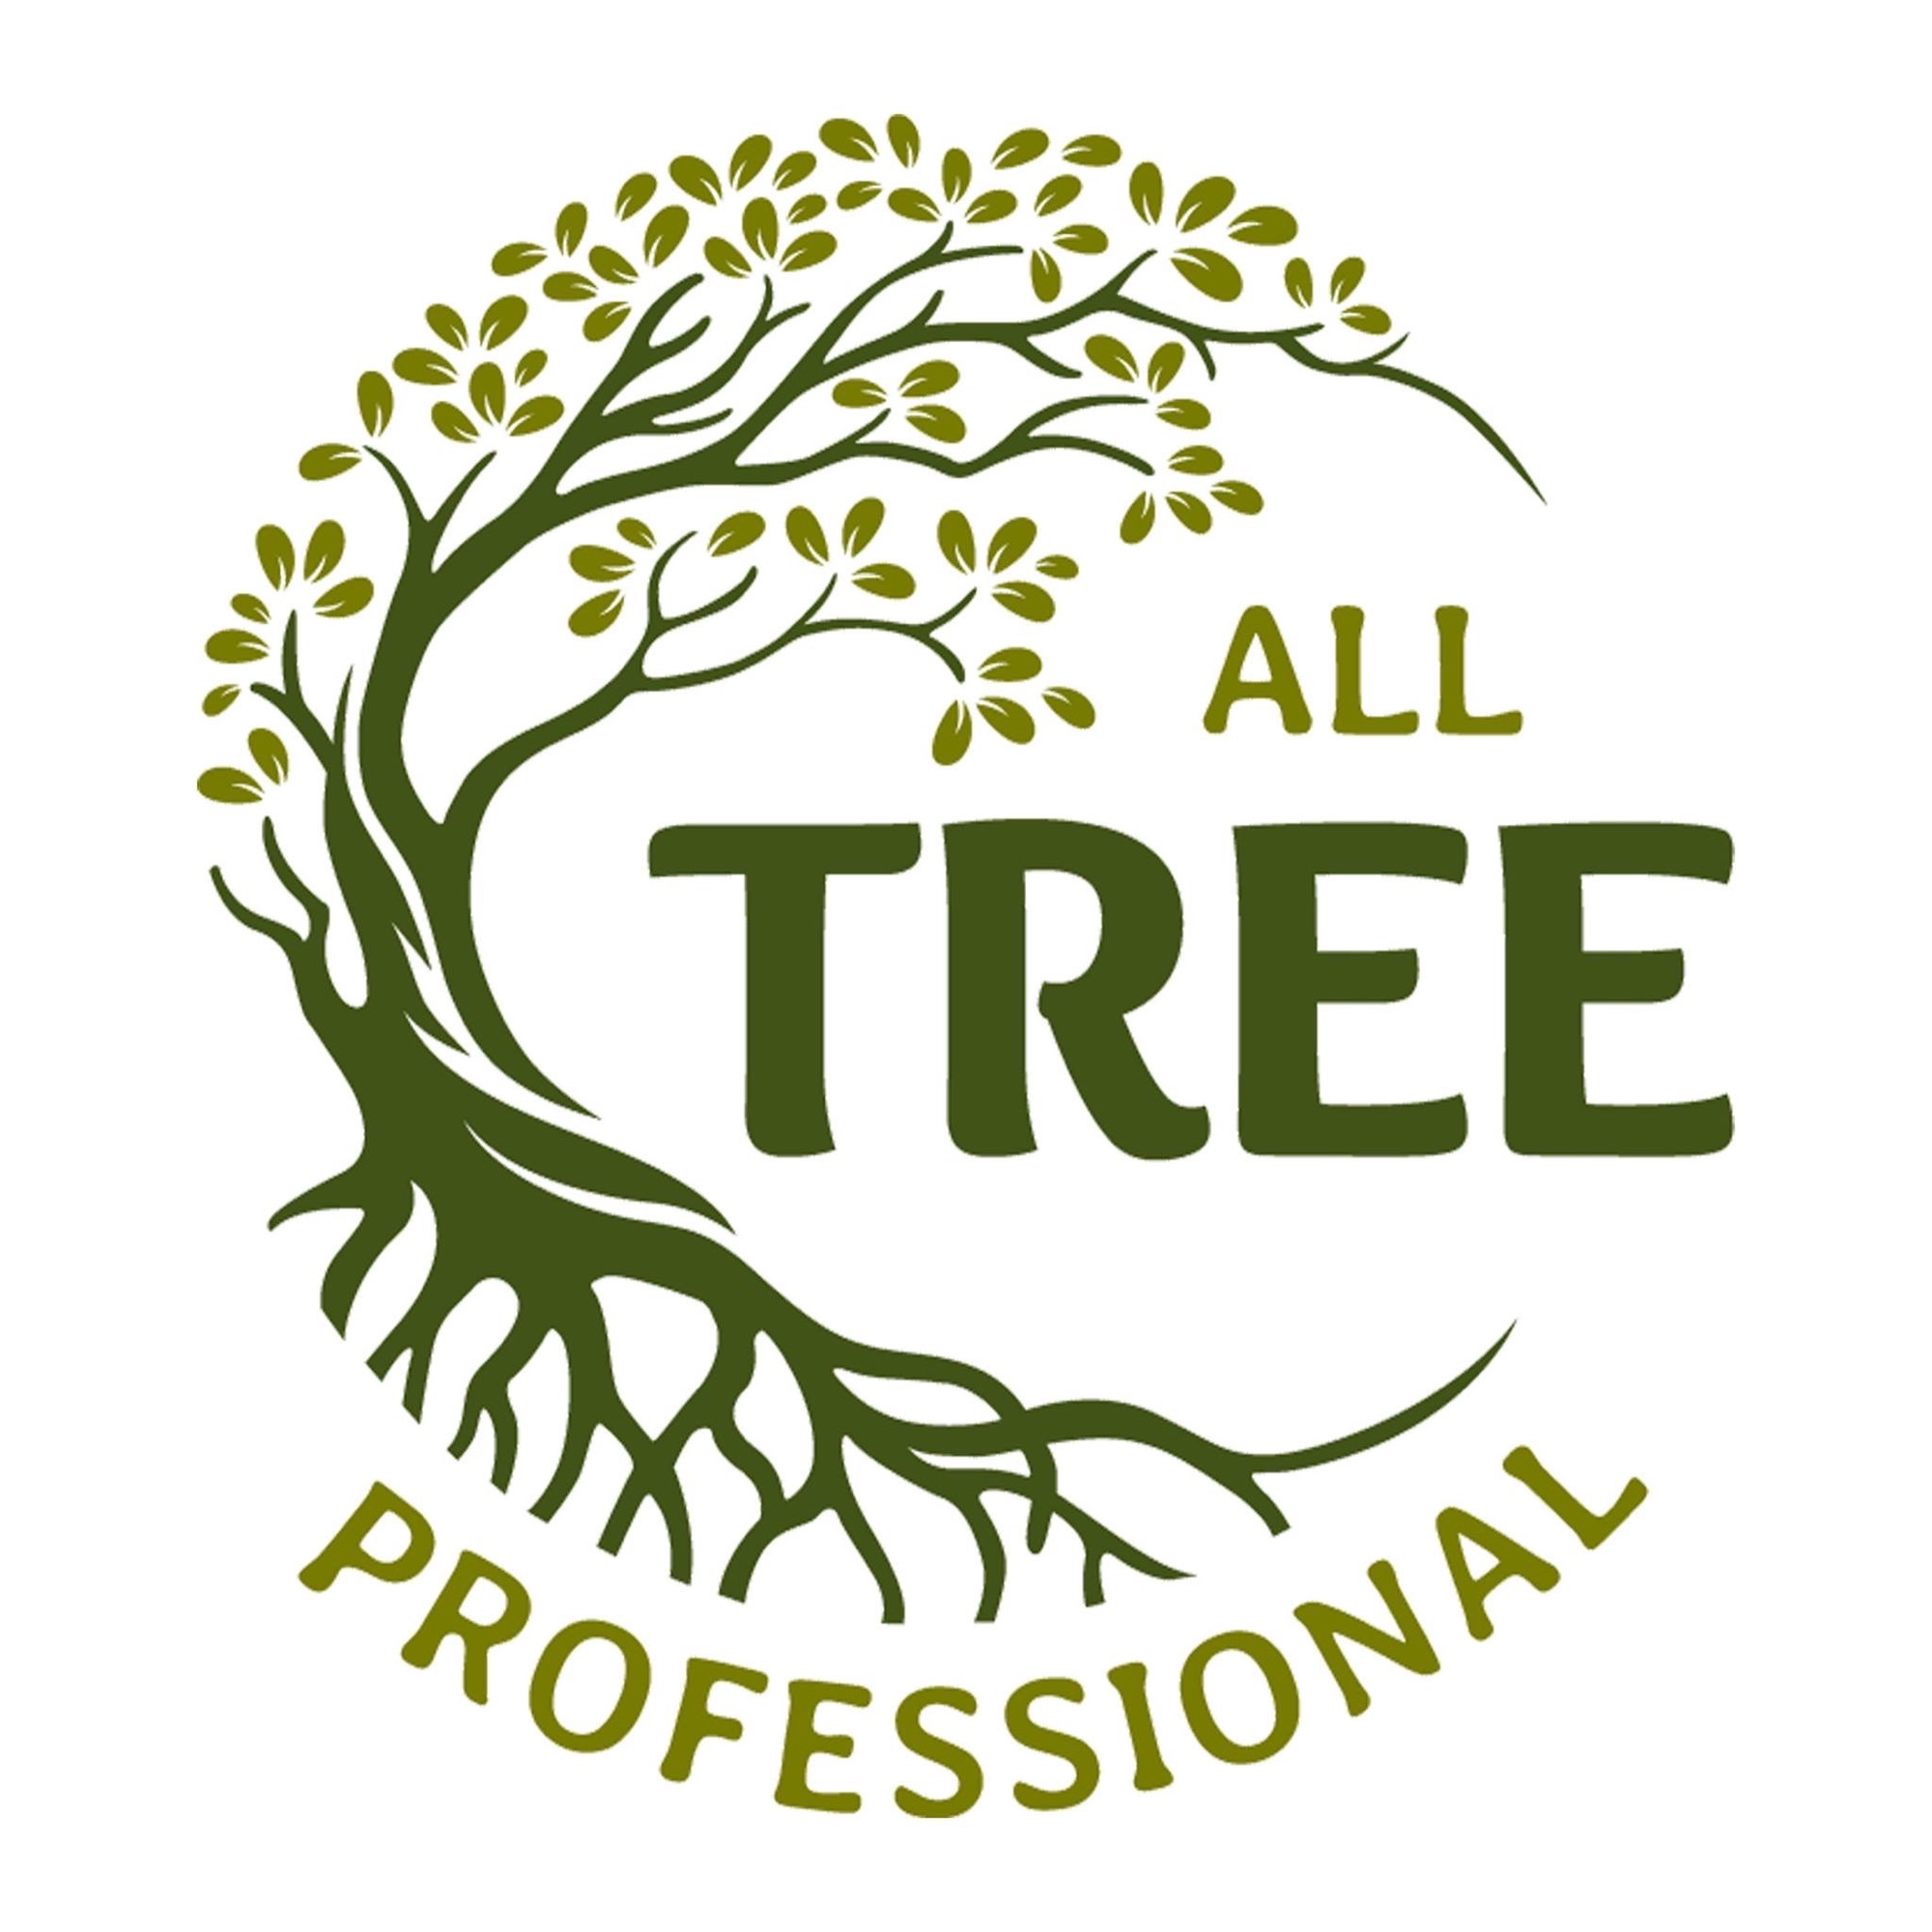 All Tree Professional Logo